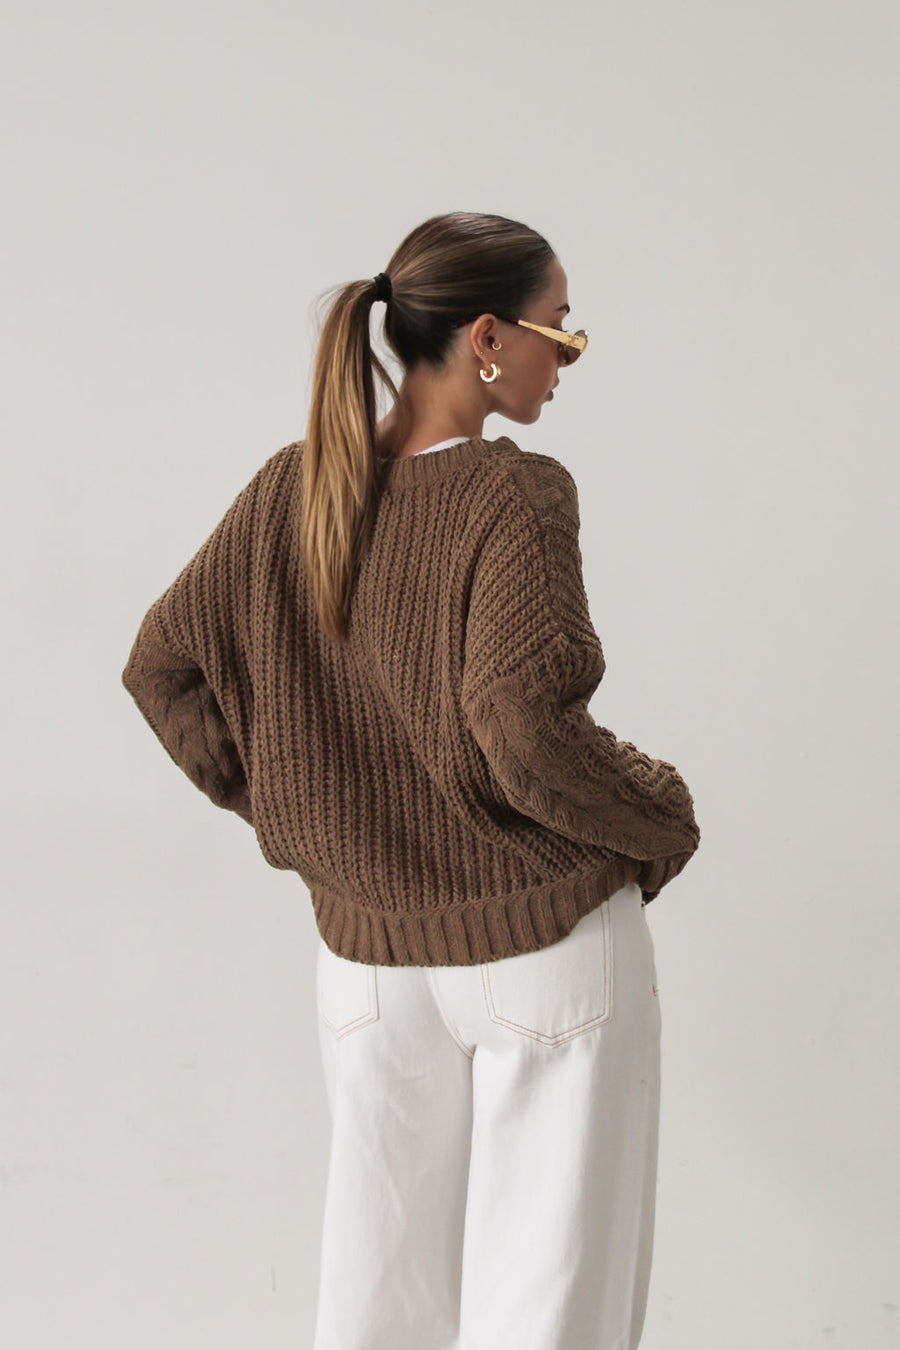 Turn It Around Sweater - FINAL SALE